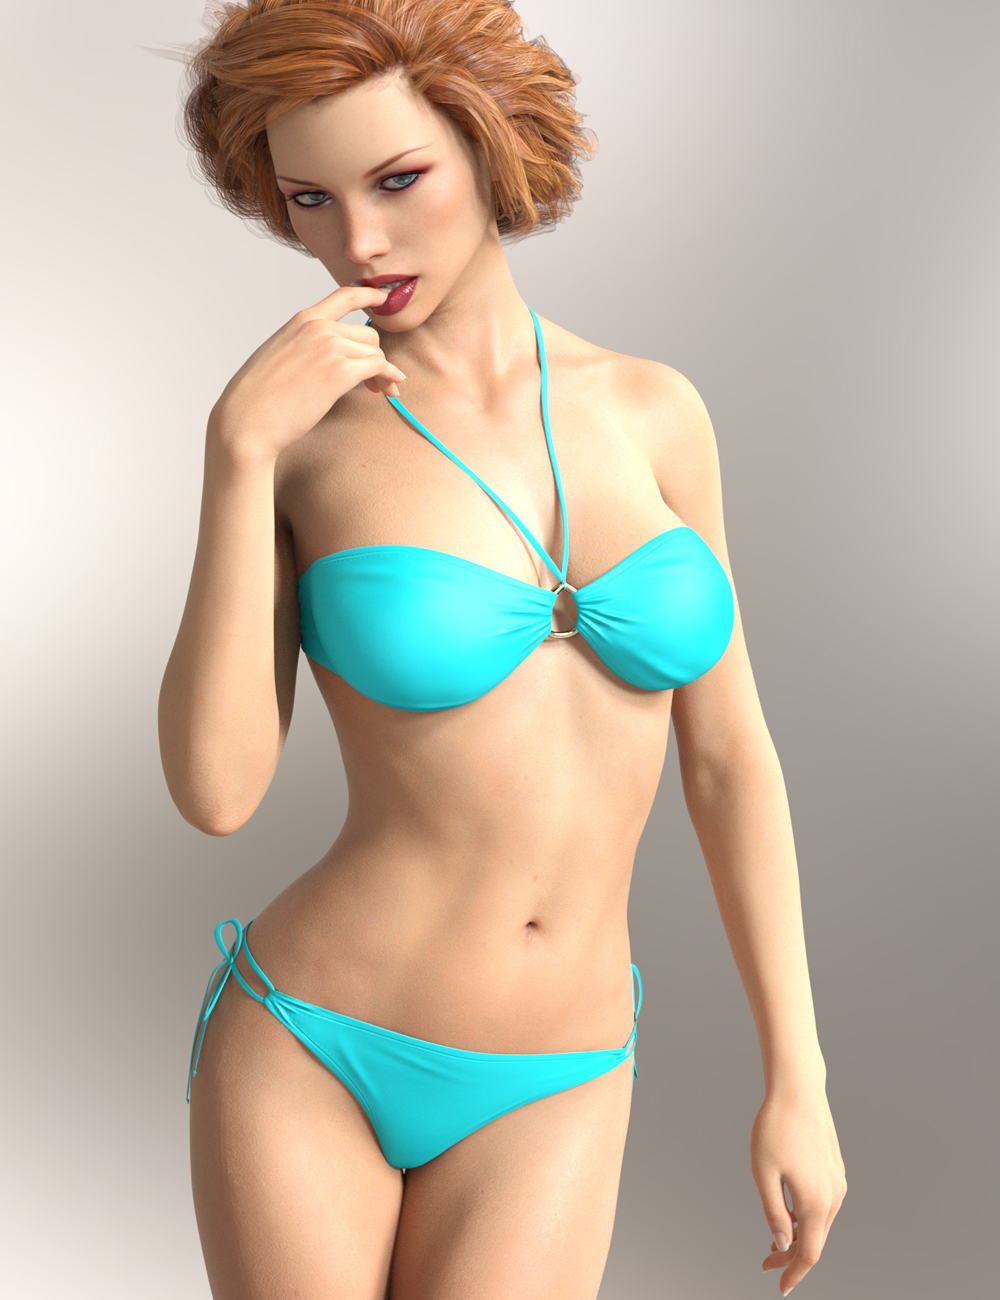 FW Beatrix HD for Victoria 8 by: Fred Winkler Art, 3D Models by Daz 3D